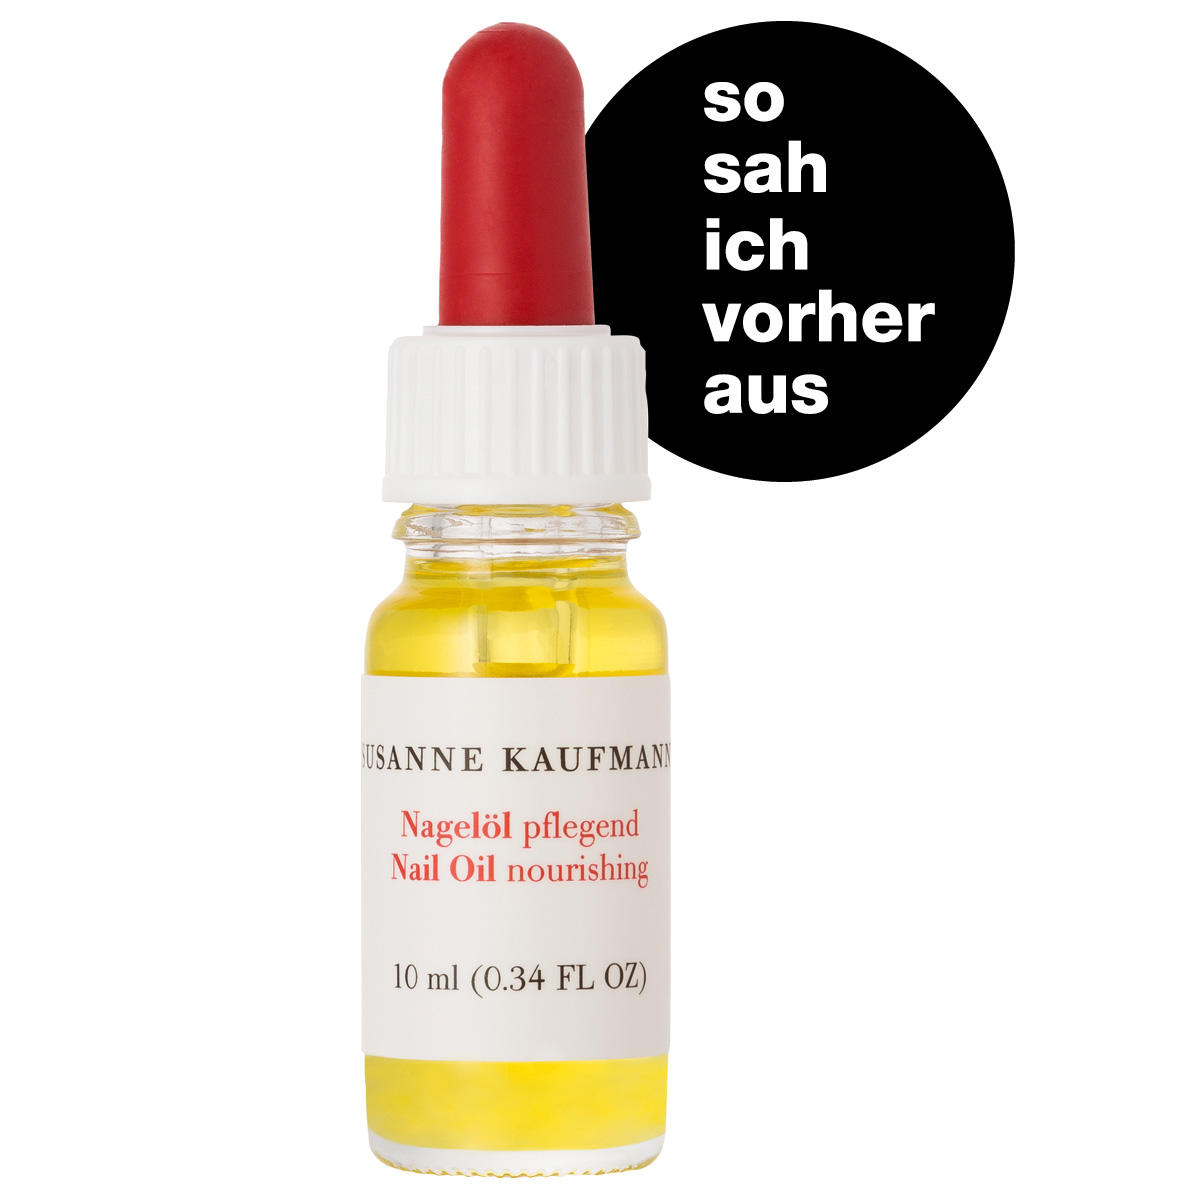 Susanne Kaufmann Nagelöl pflegend - Nail Oil 10 ml - 3